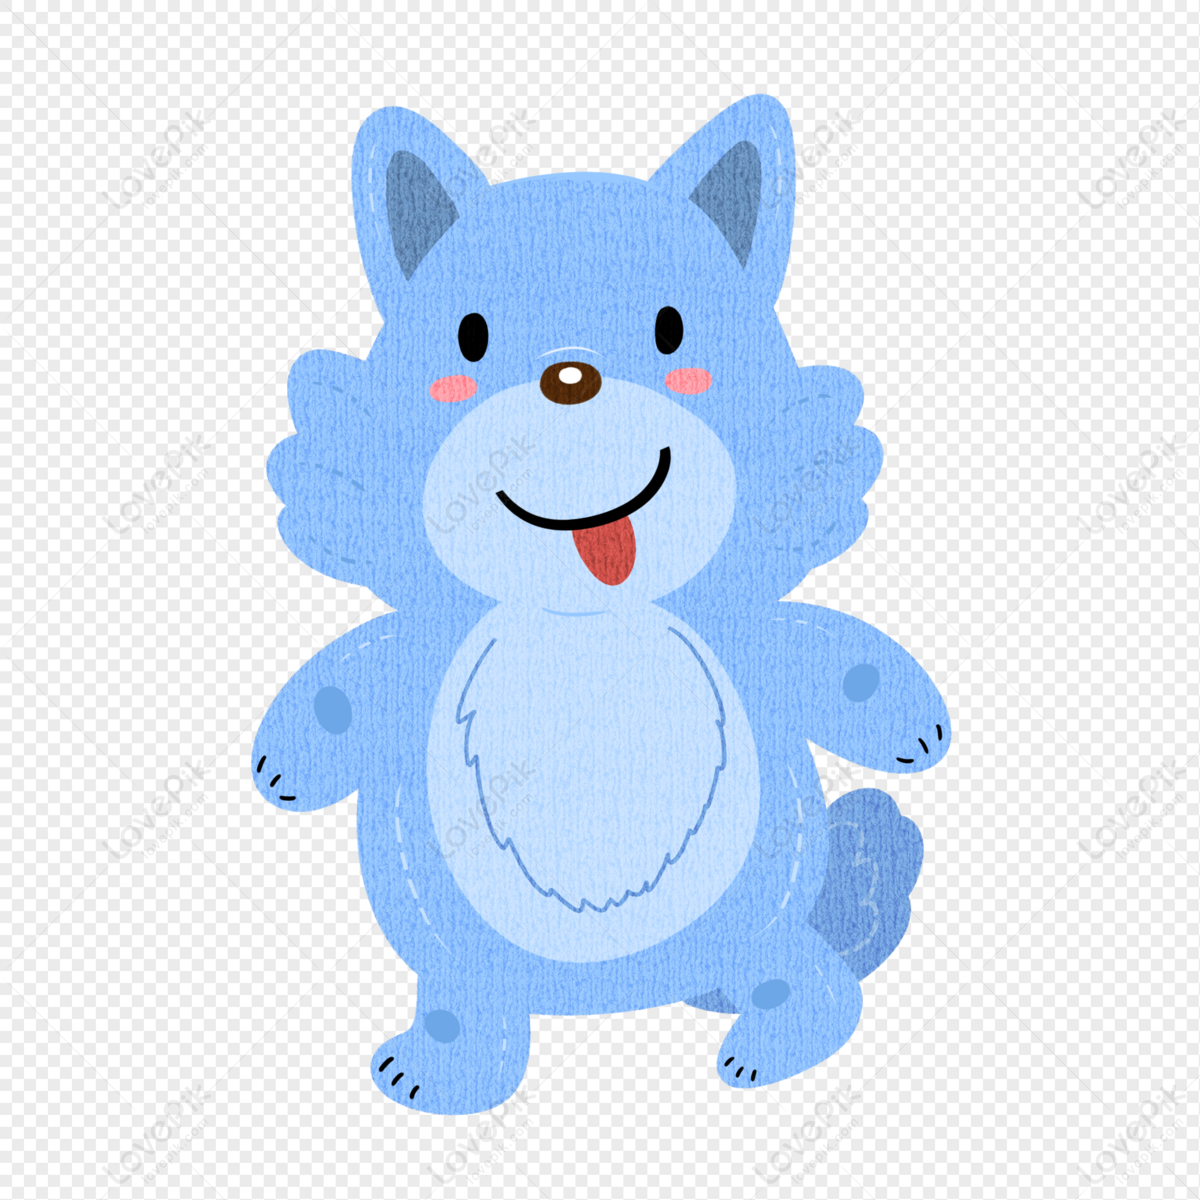 Cute Wolf In Cartoon, Animal, Cartoon, Baby PNG Transparent Image